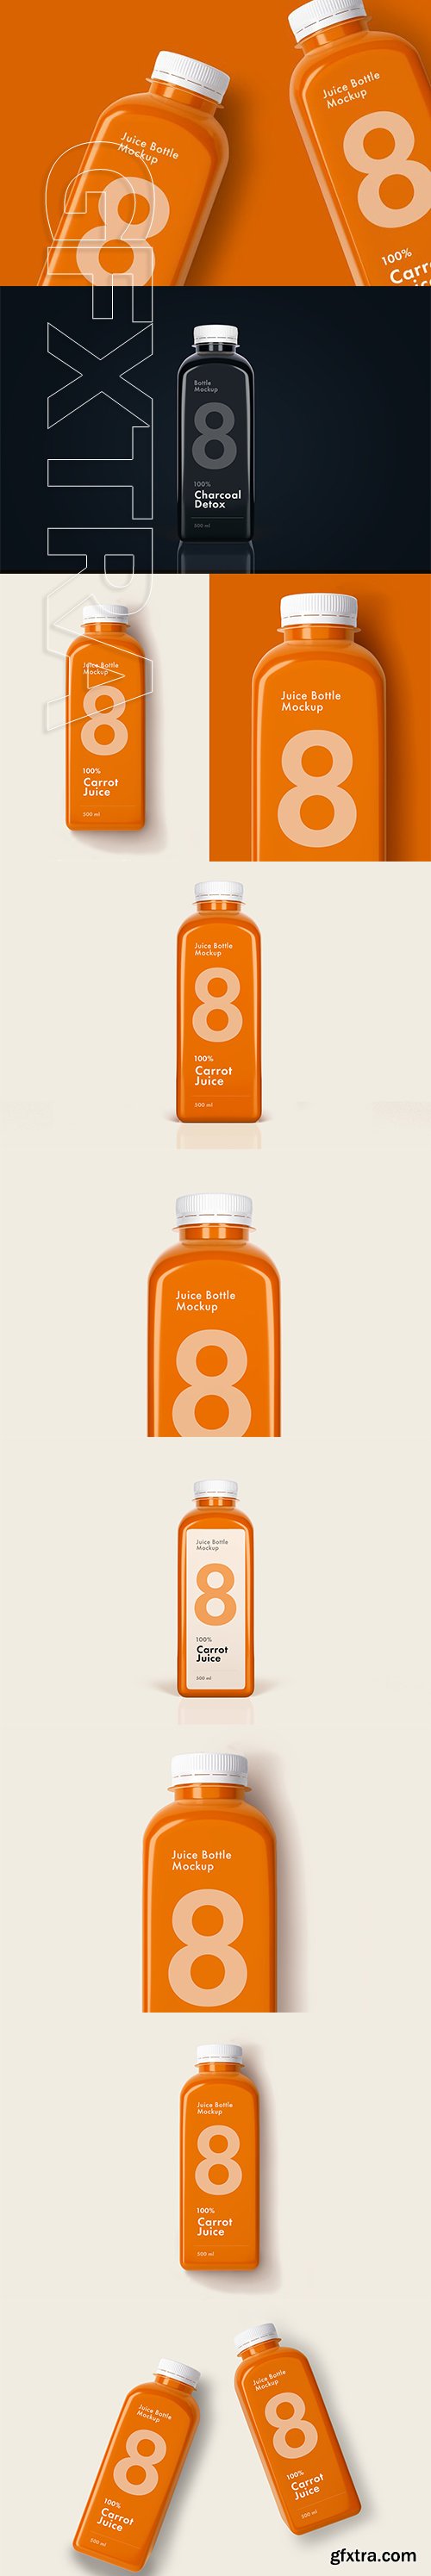 CreativeMarket - Juice Bottle Mockup 2650715